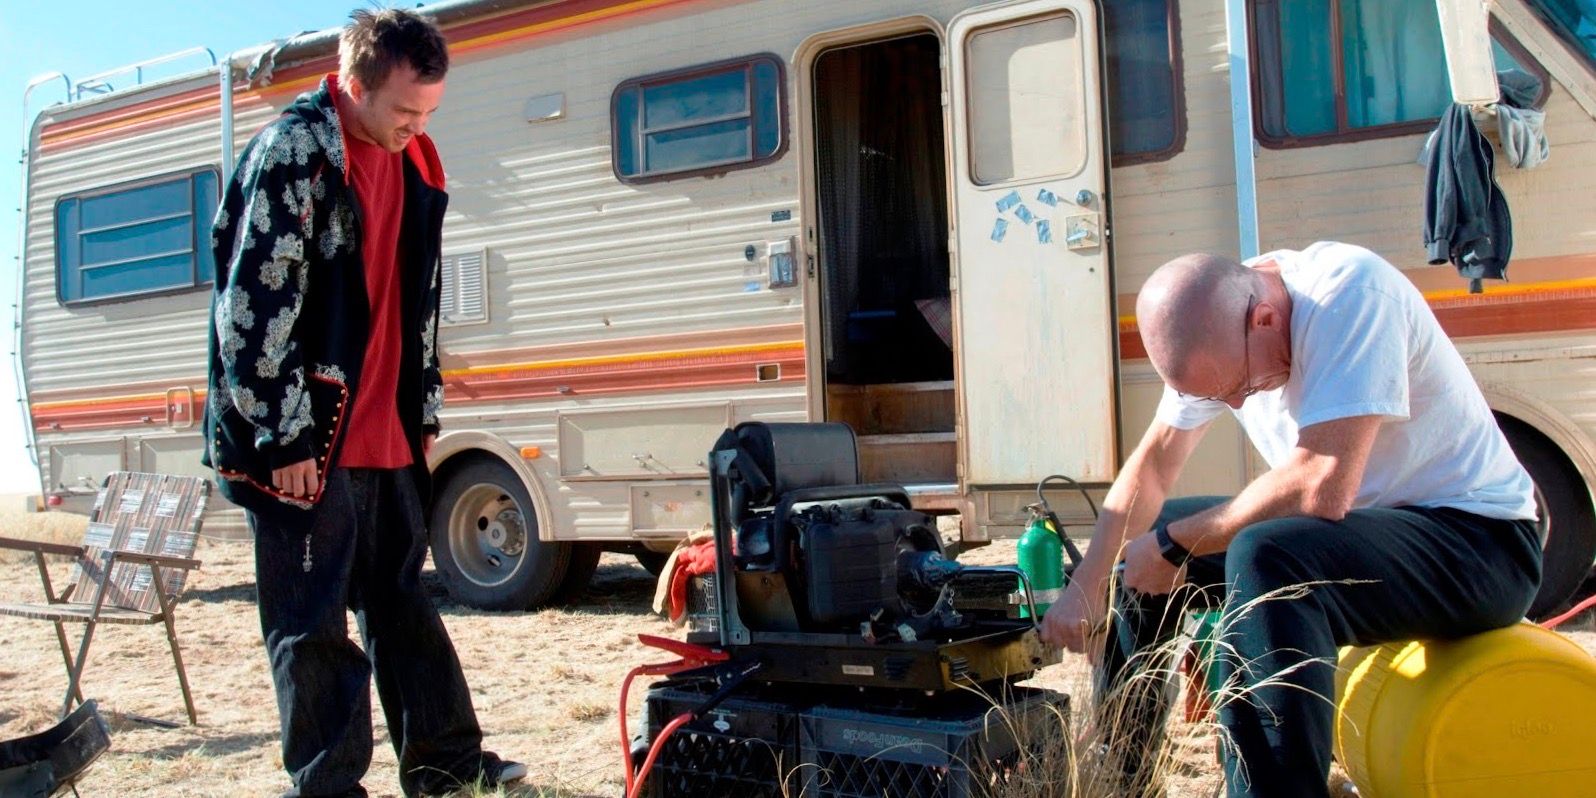 Bryan Cranston as Walter White and Aaron Paul as Jesse Pinkman in Breaking Bad